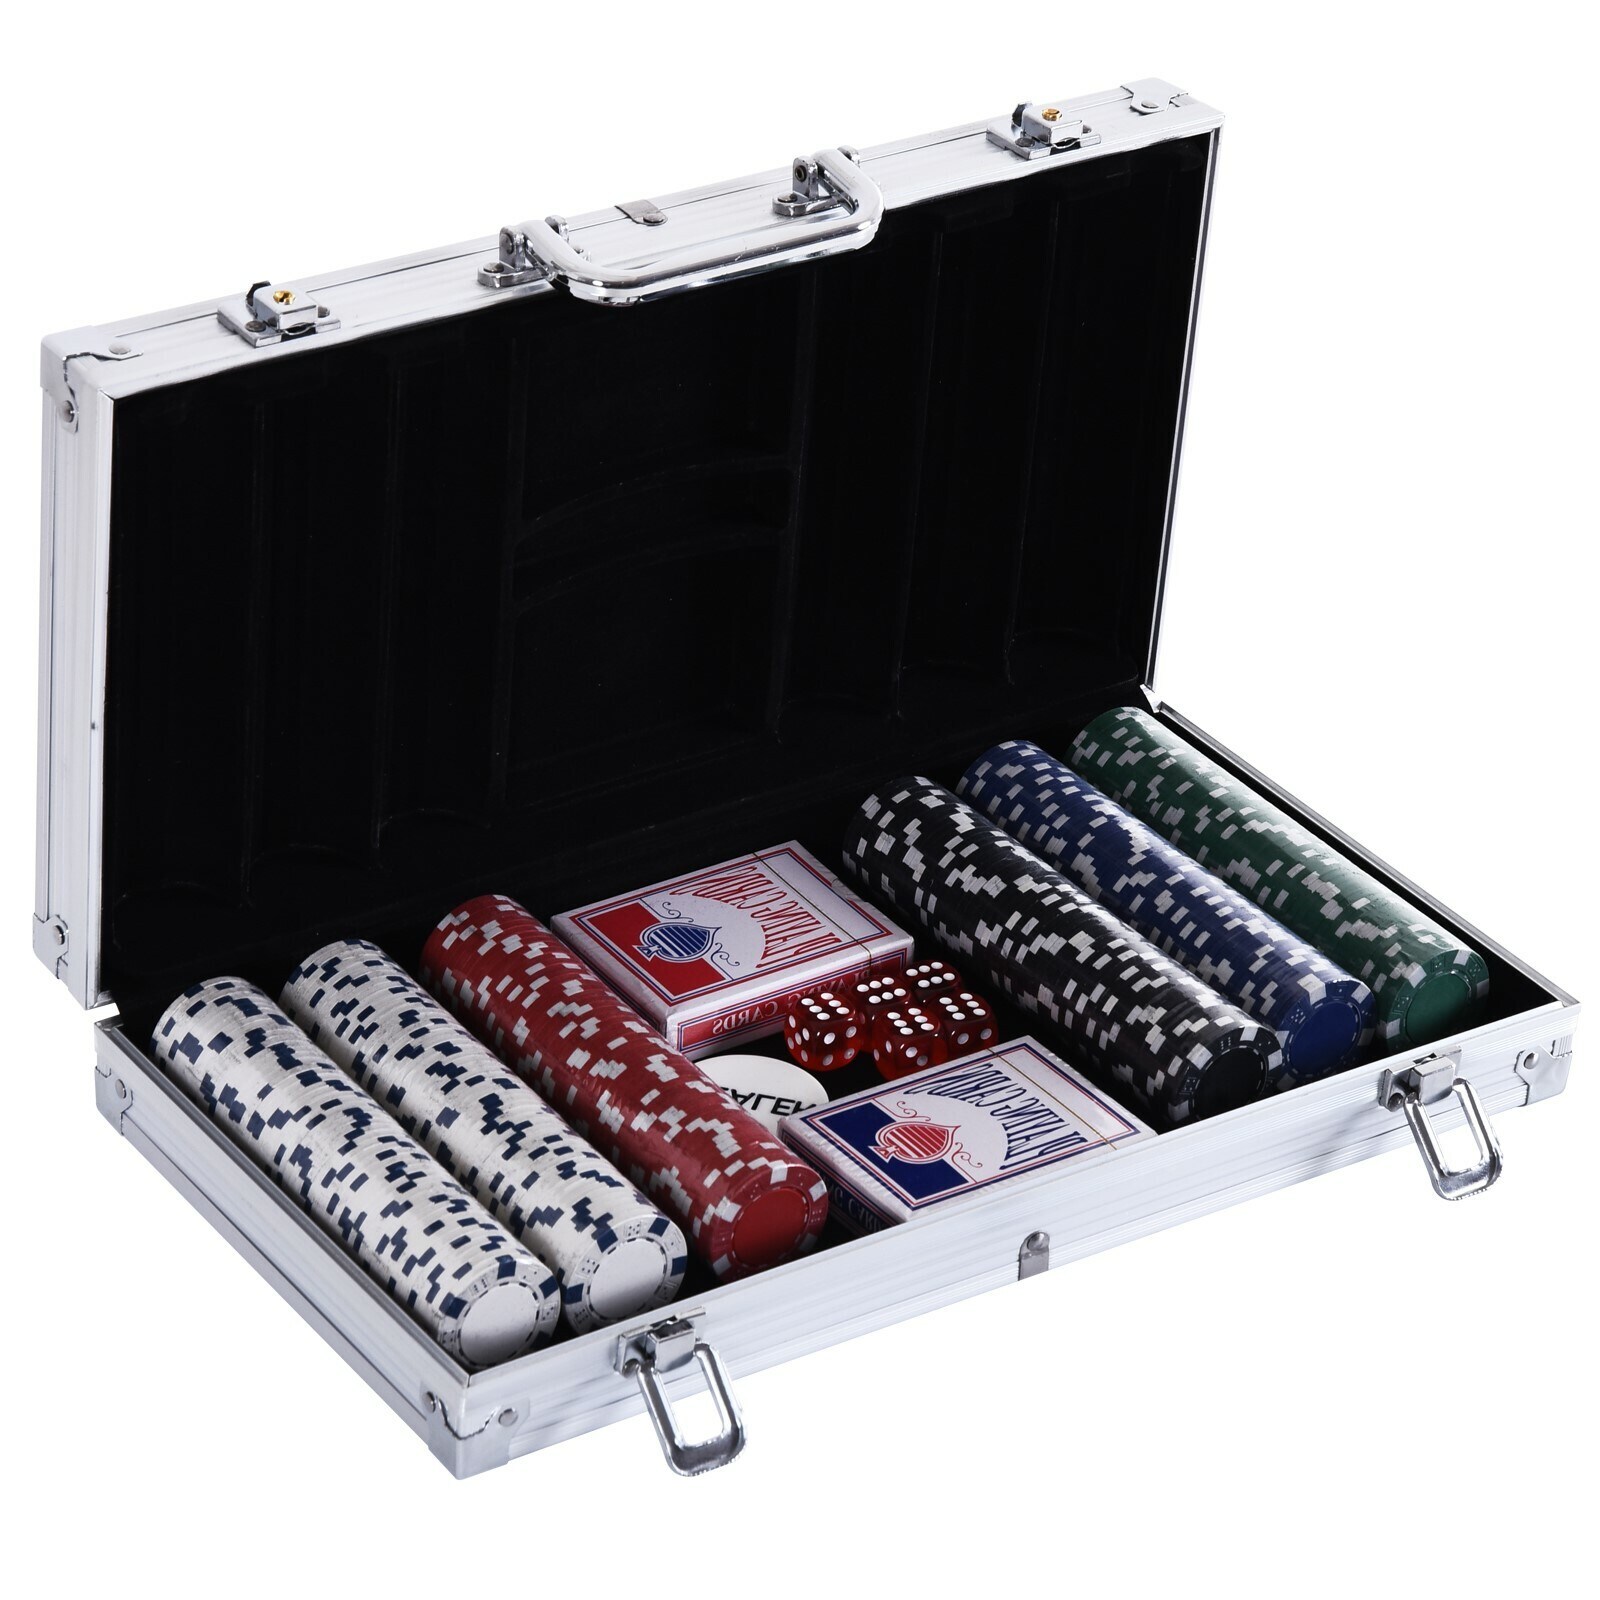 HOMCOM Pokerkoffer mit 300 Chips silber 38 x 20,5 x 6,5 cm (LxBxH)